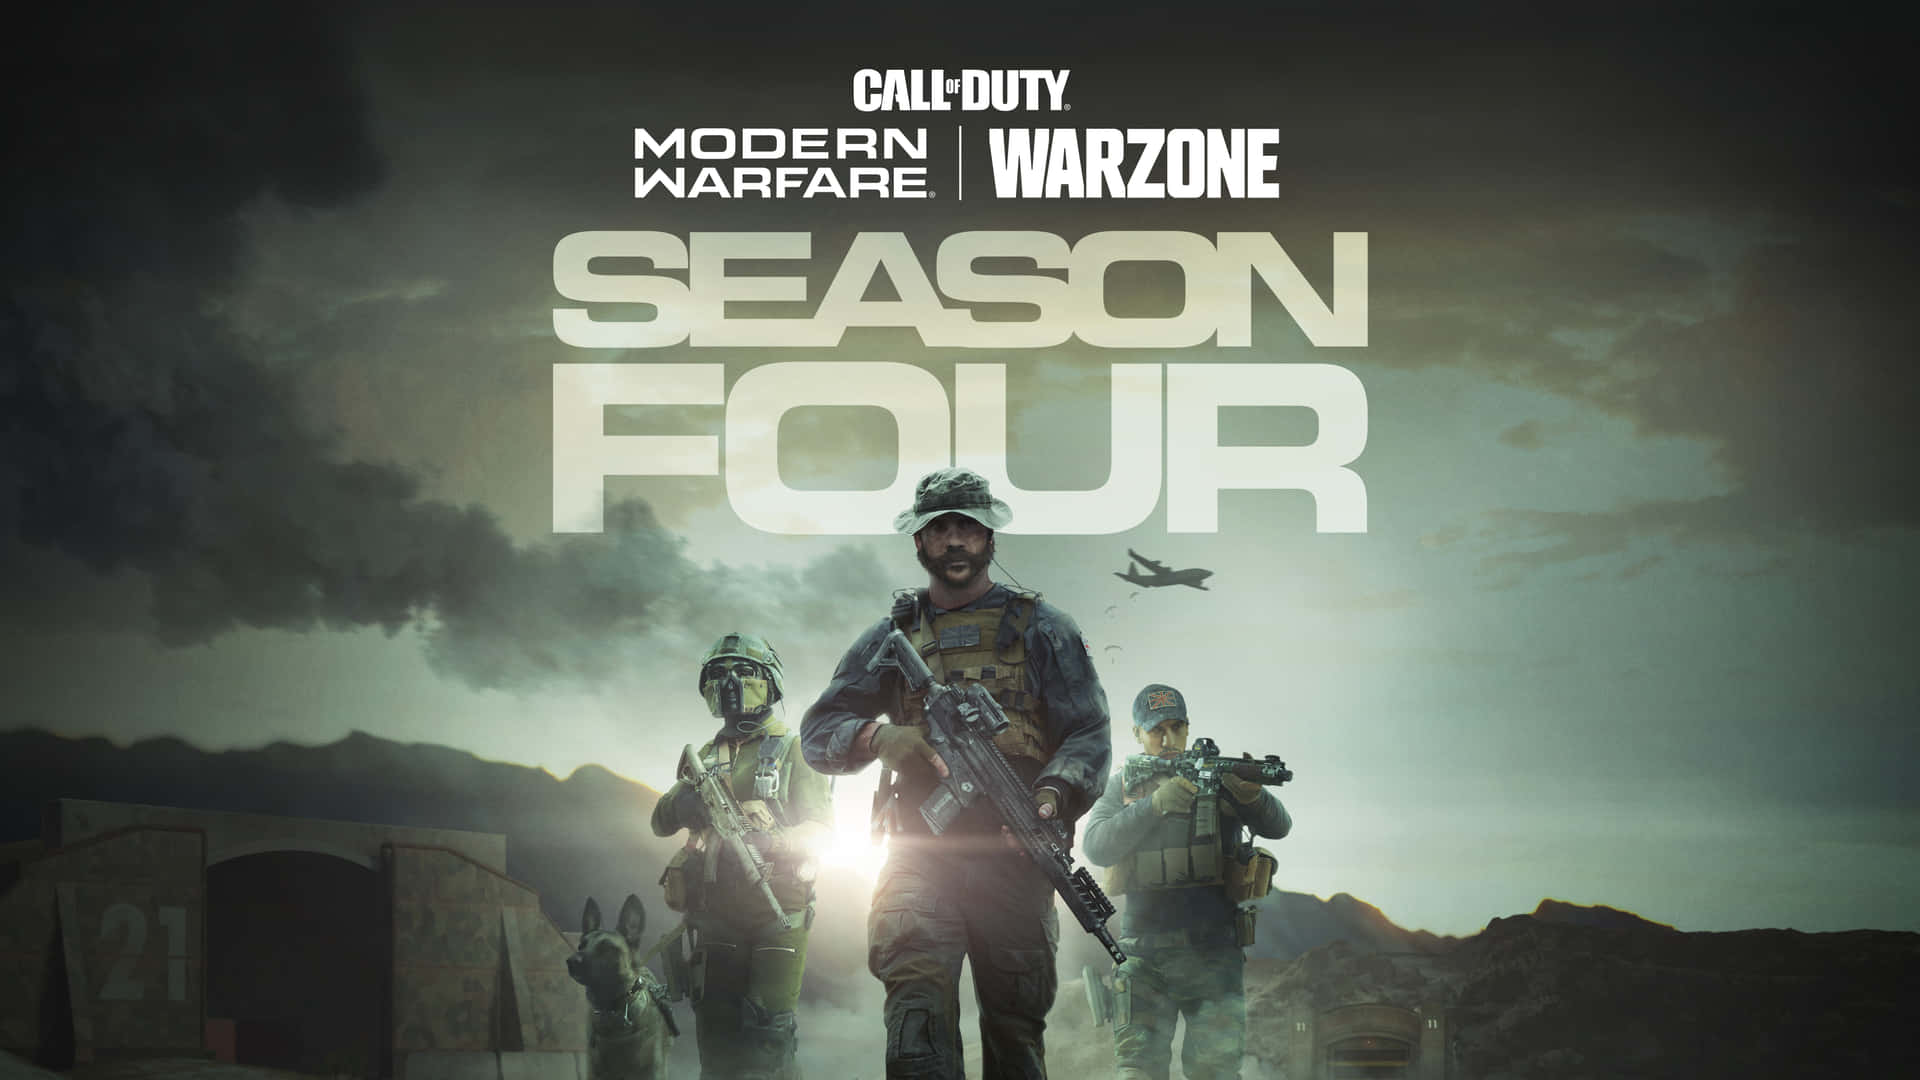 Descubra Os Mistérios De Call Of Duty: Modern Warfare Na Tela Do Seu Computador Ou Celular. Papel de Parede